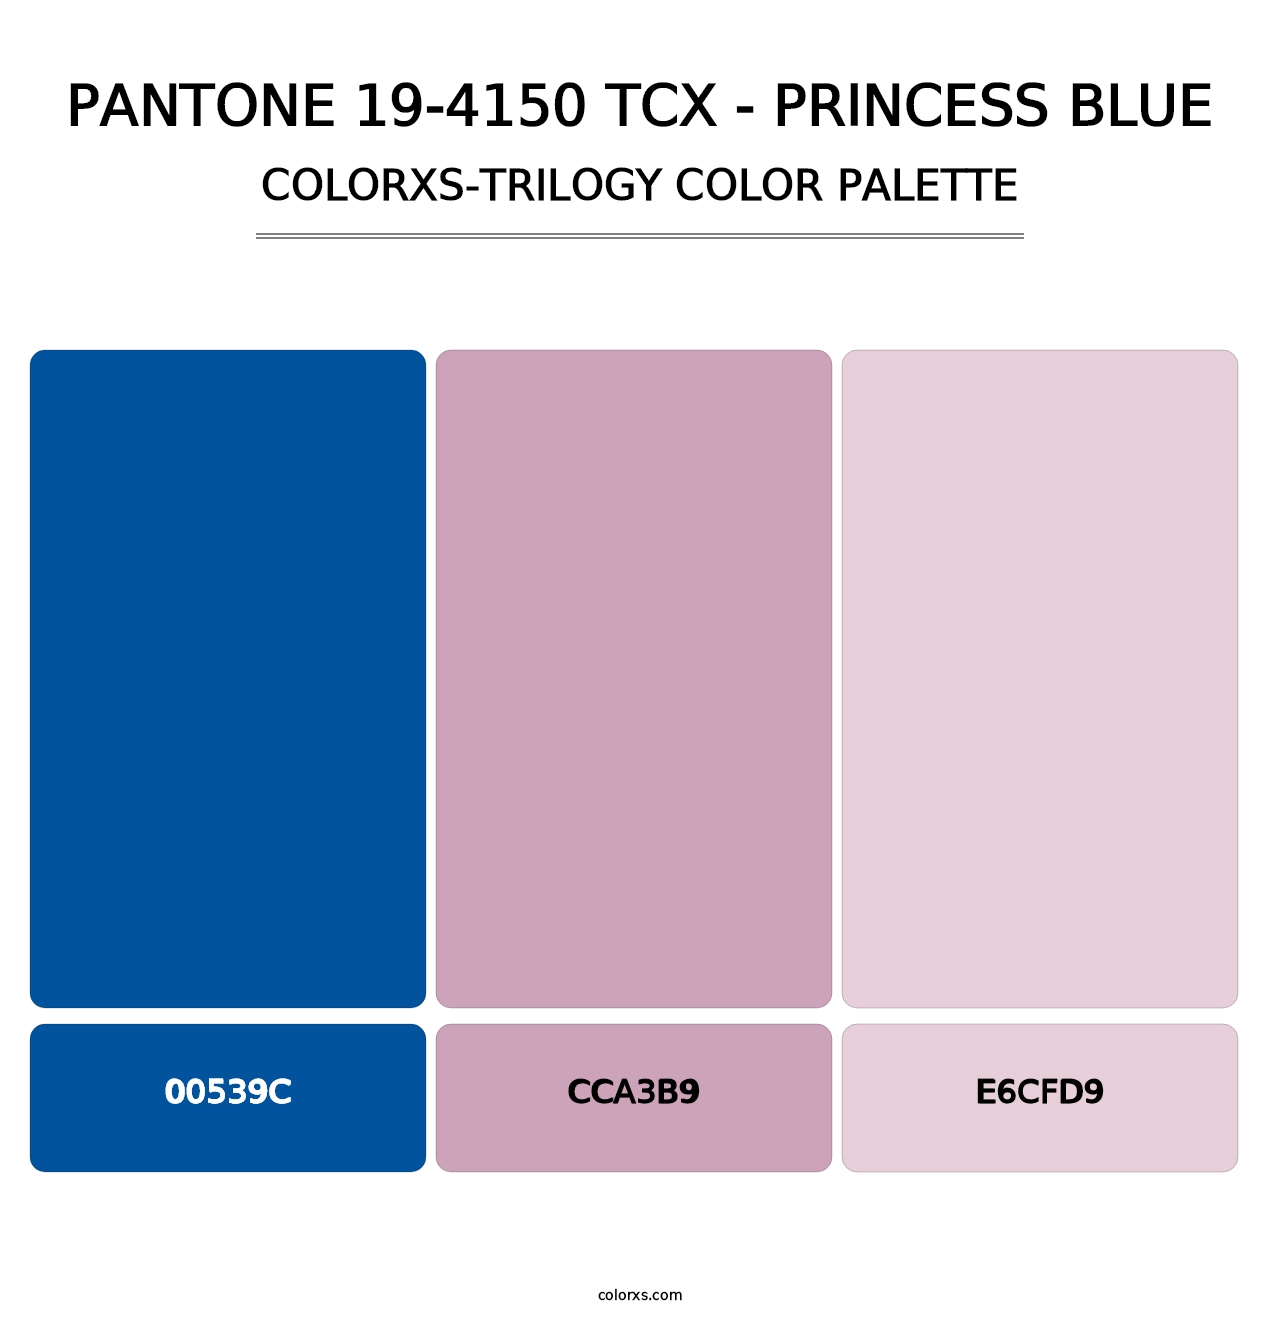 PANTONE 19-4150 TCX - Princess Blue - Colorxs Trilogy Palette